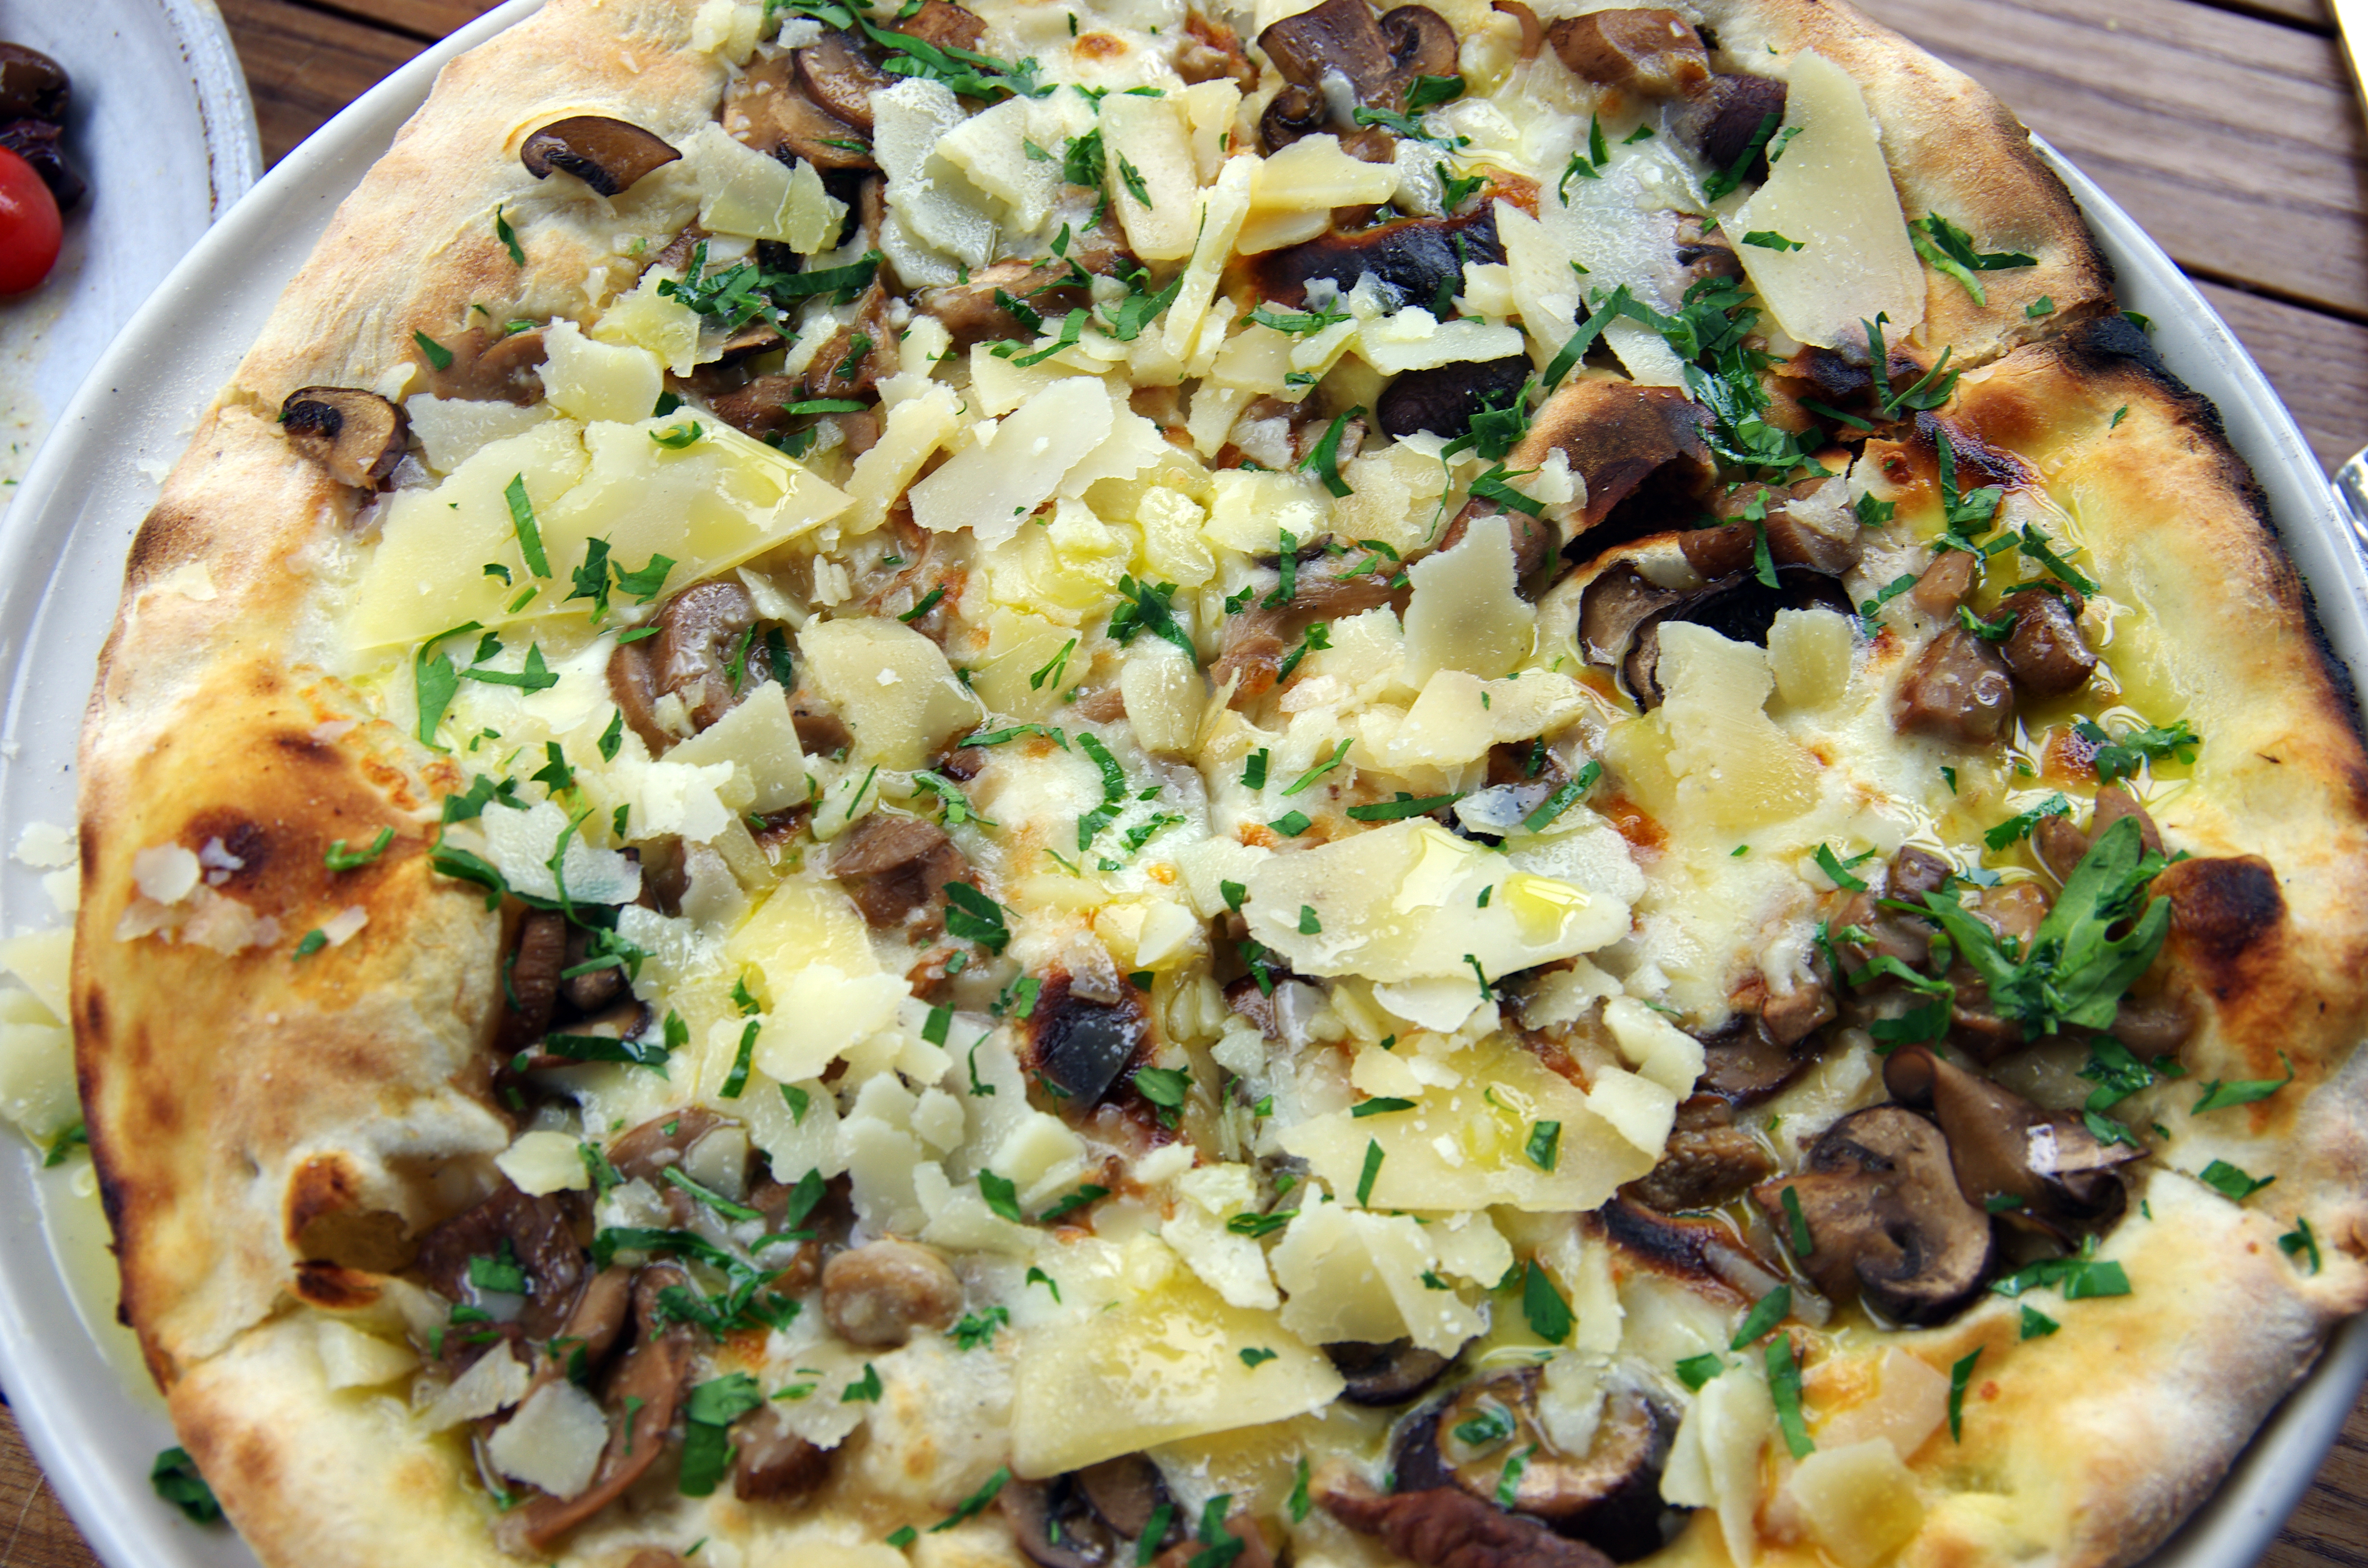 Funghi pizza with fior di latte (cow's milk mozzarella cheese), wild mushrooms, parmesan, truffle oil and fresh parsley